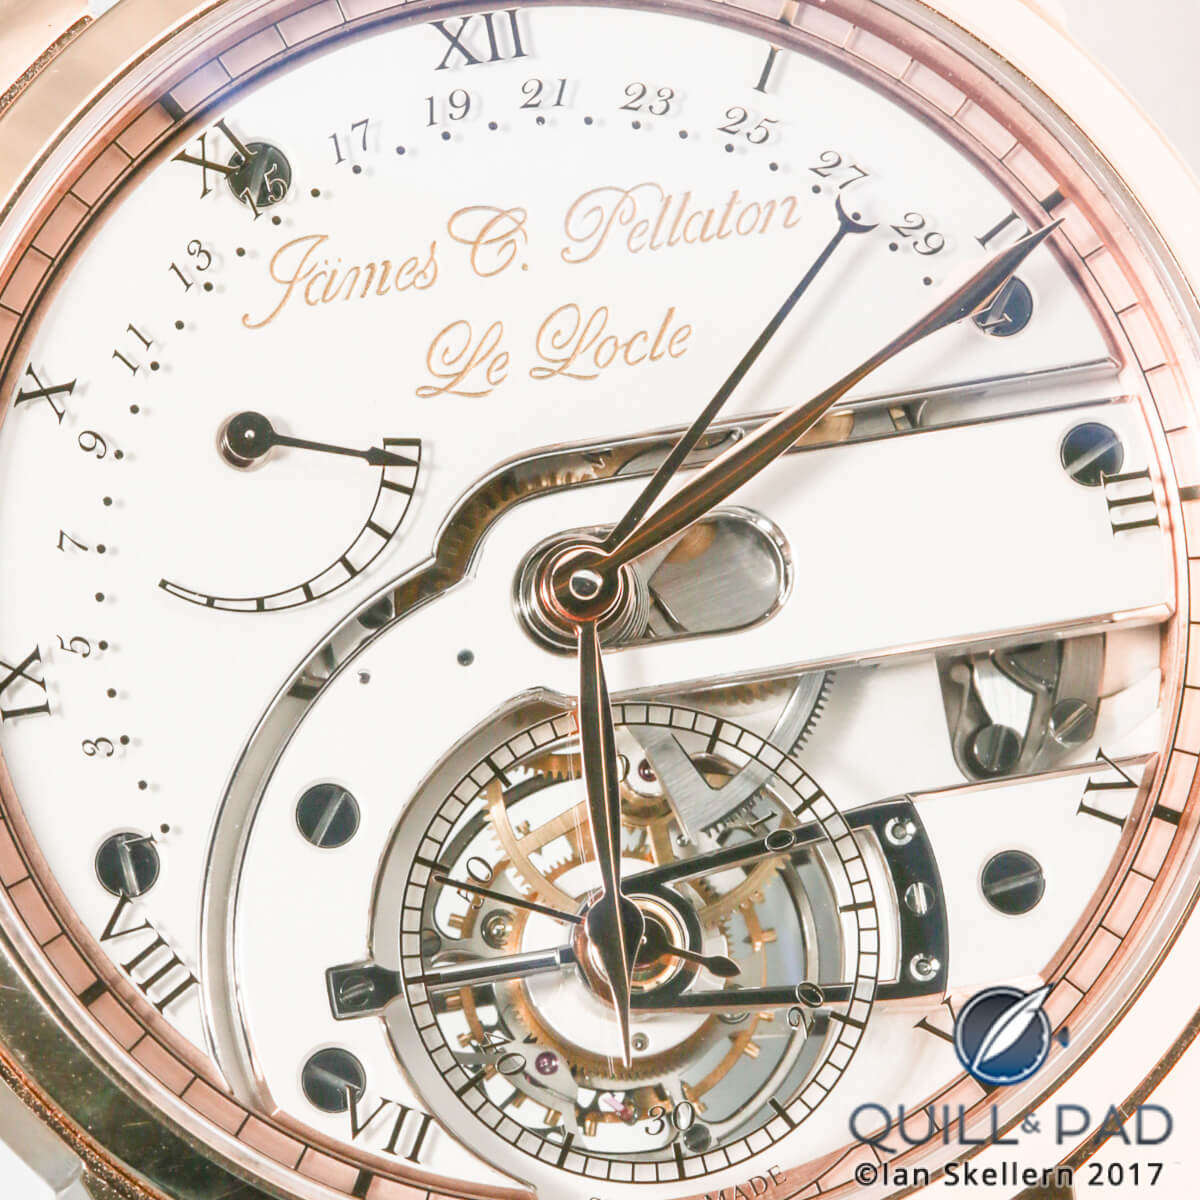 Close up look dialside of the James Pellaton Chronometer Royal Marine